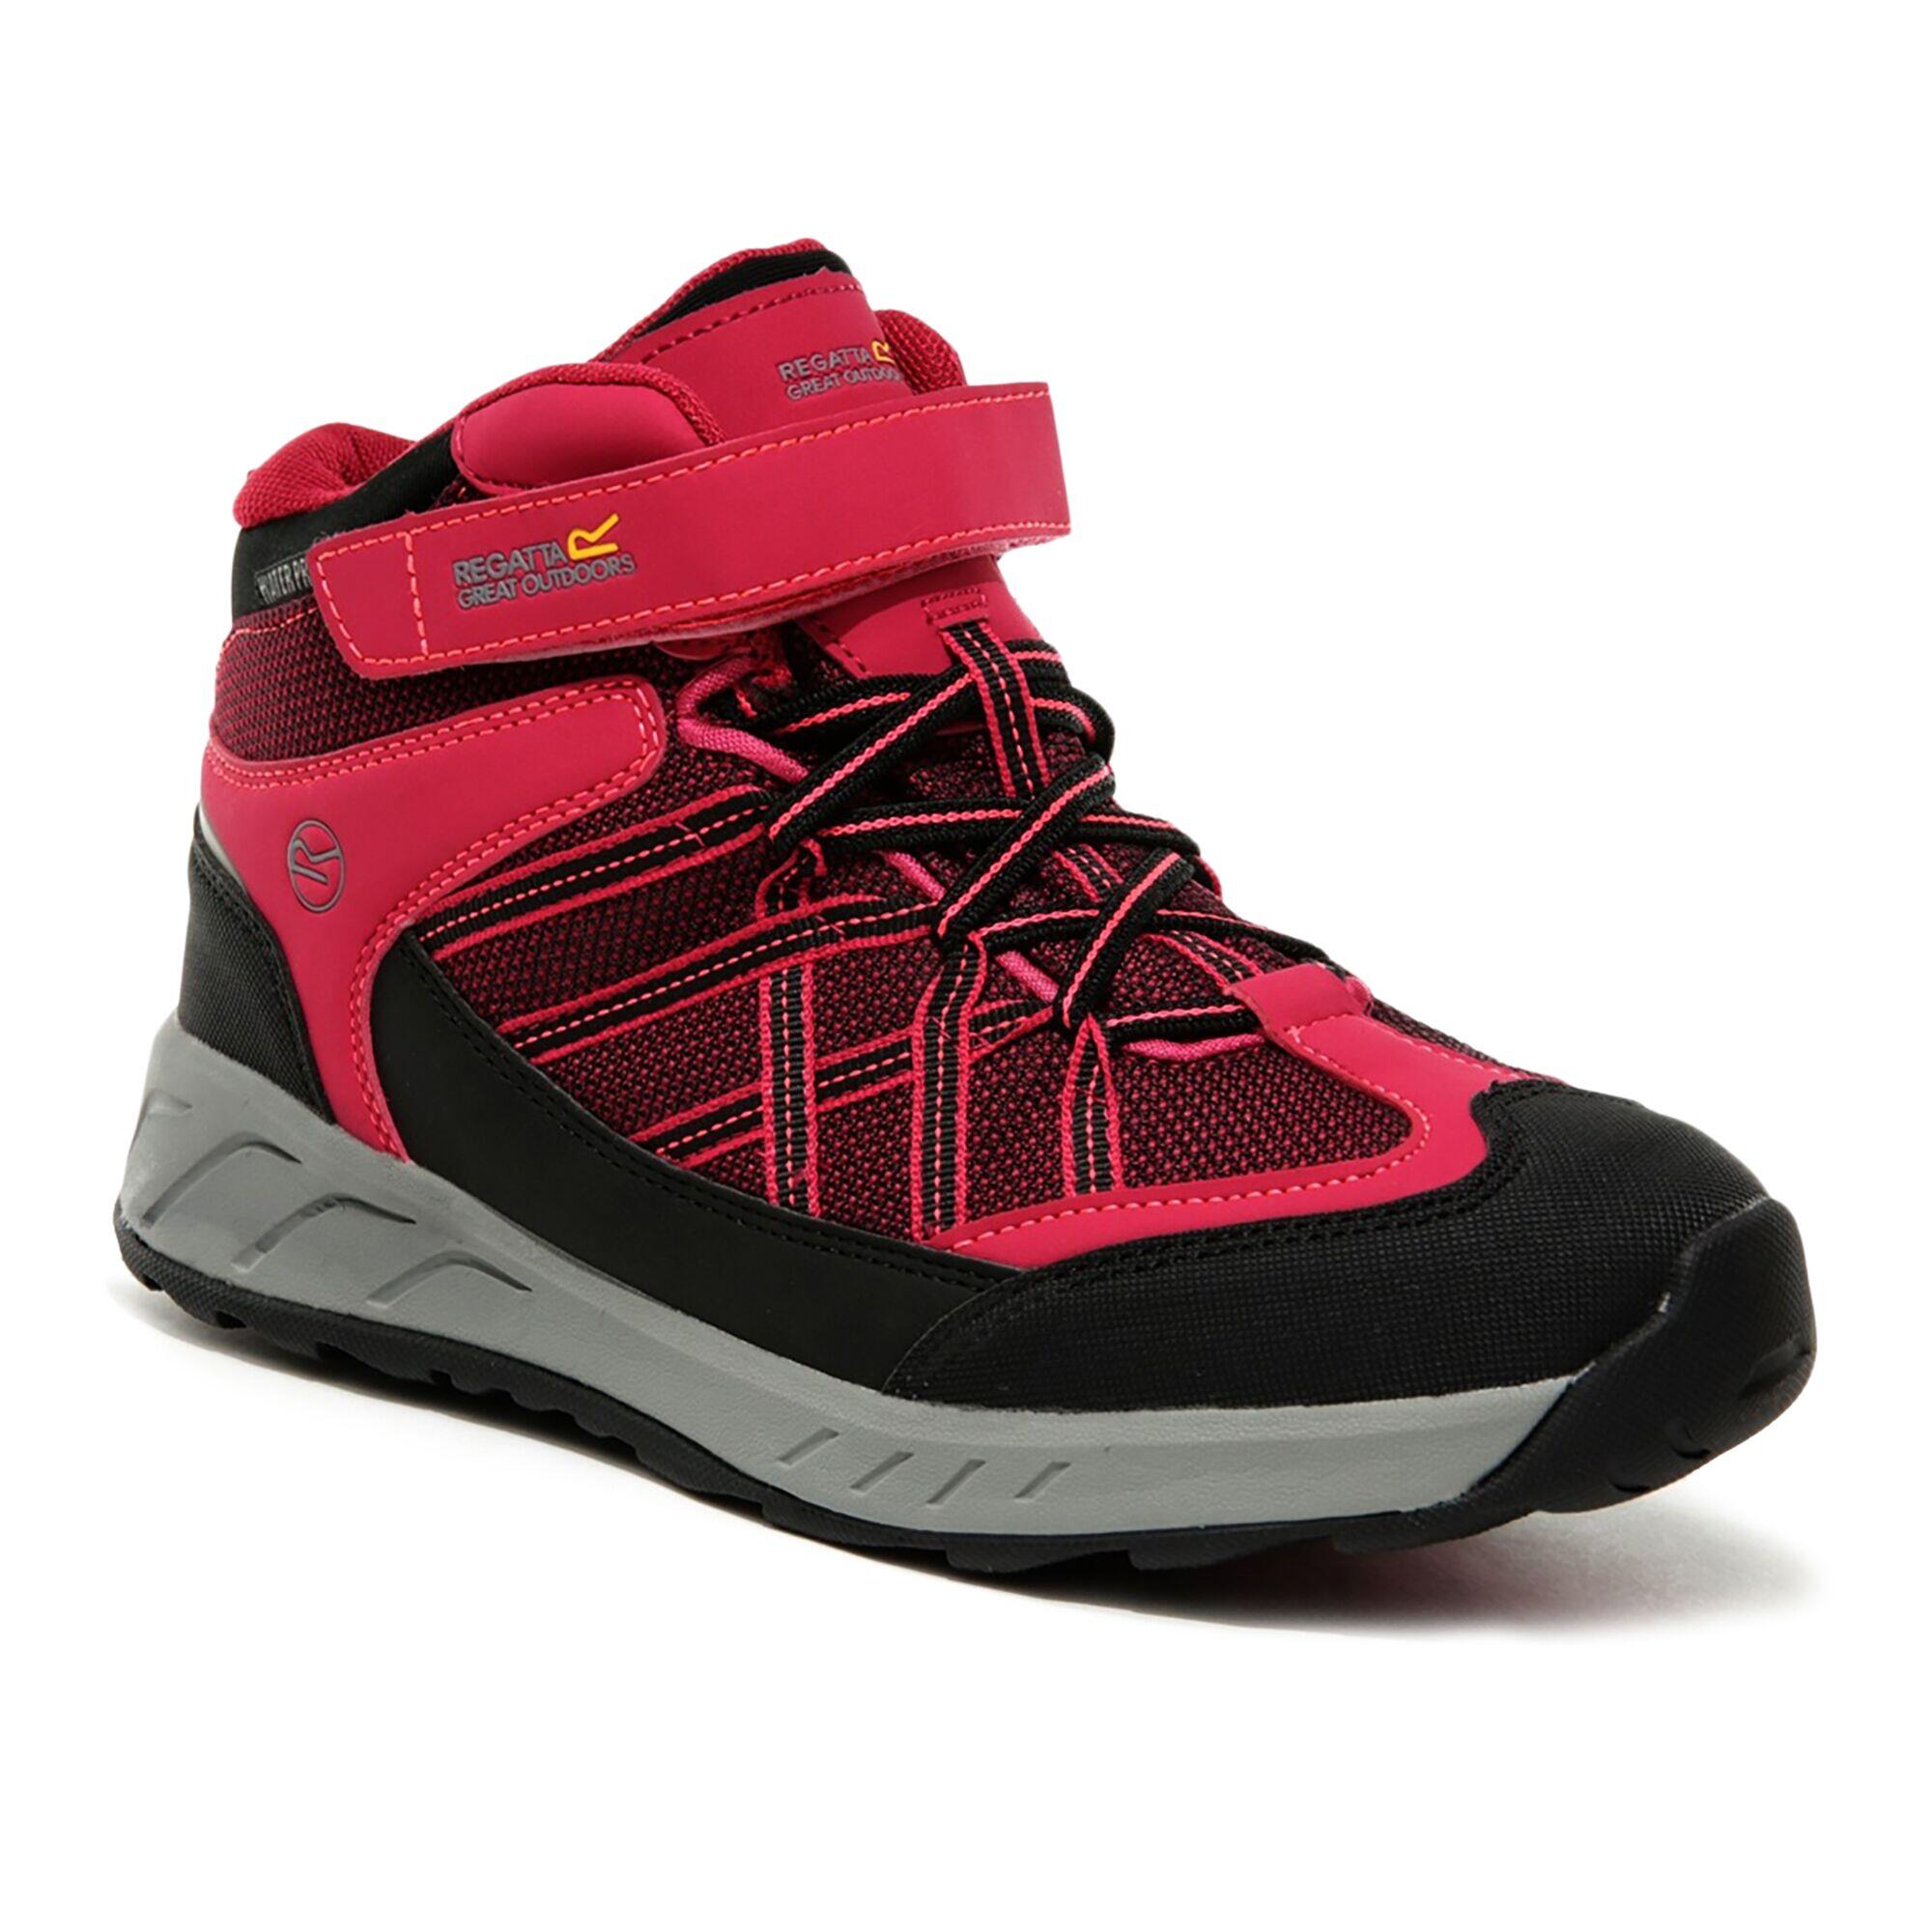 Samaris V Kids' Hiking Waterproof Mid Boots - Cerise/Neon Pink 1/6